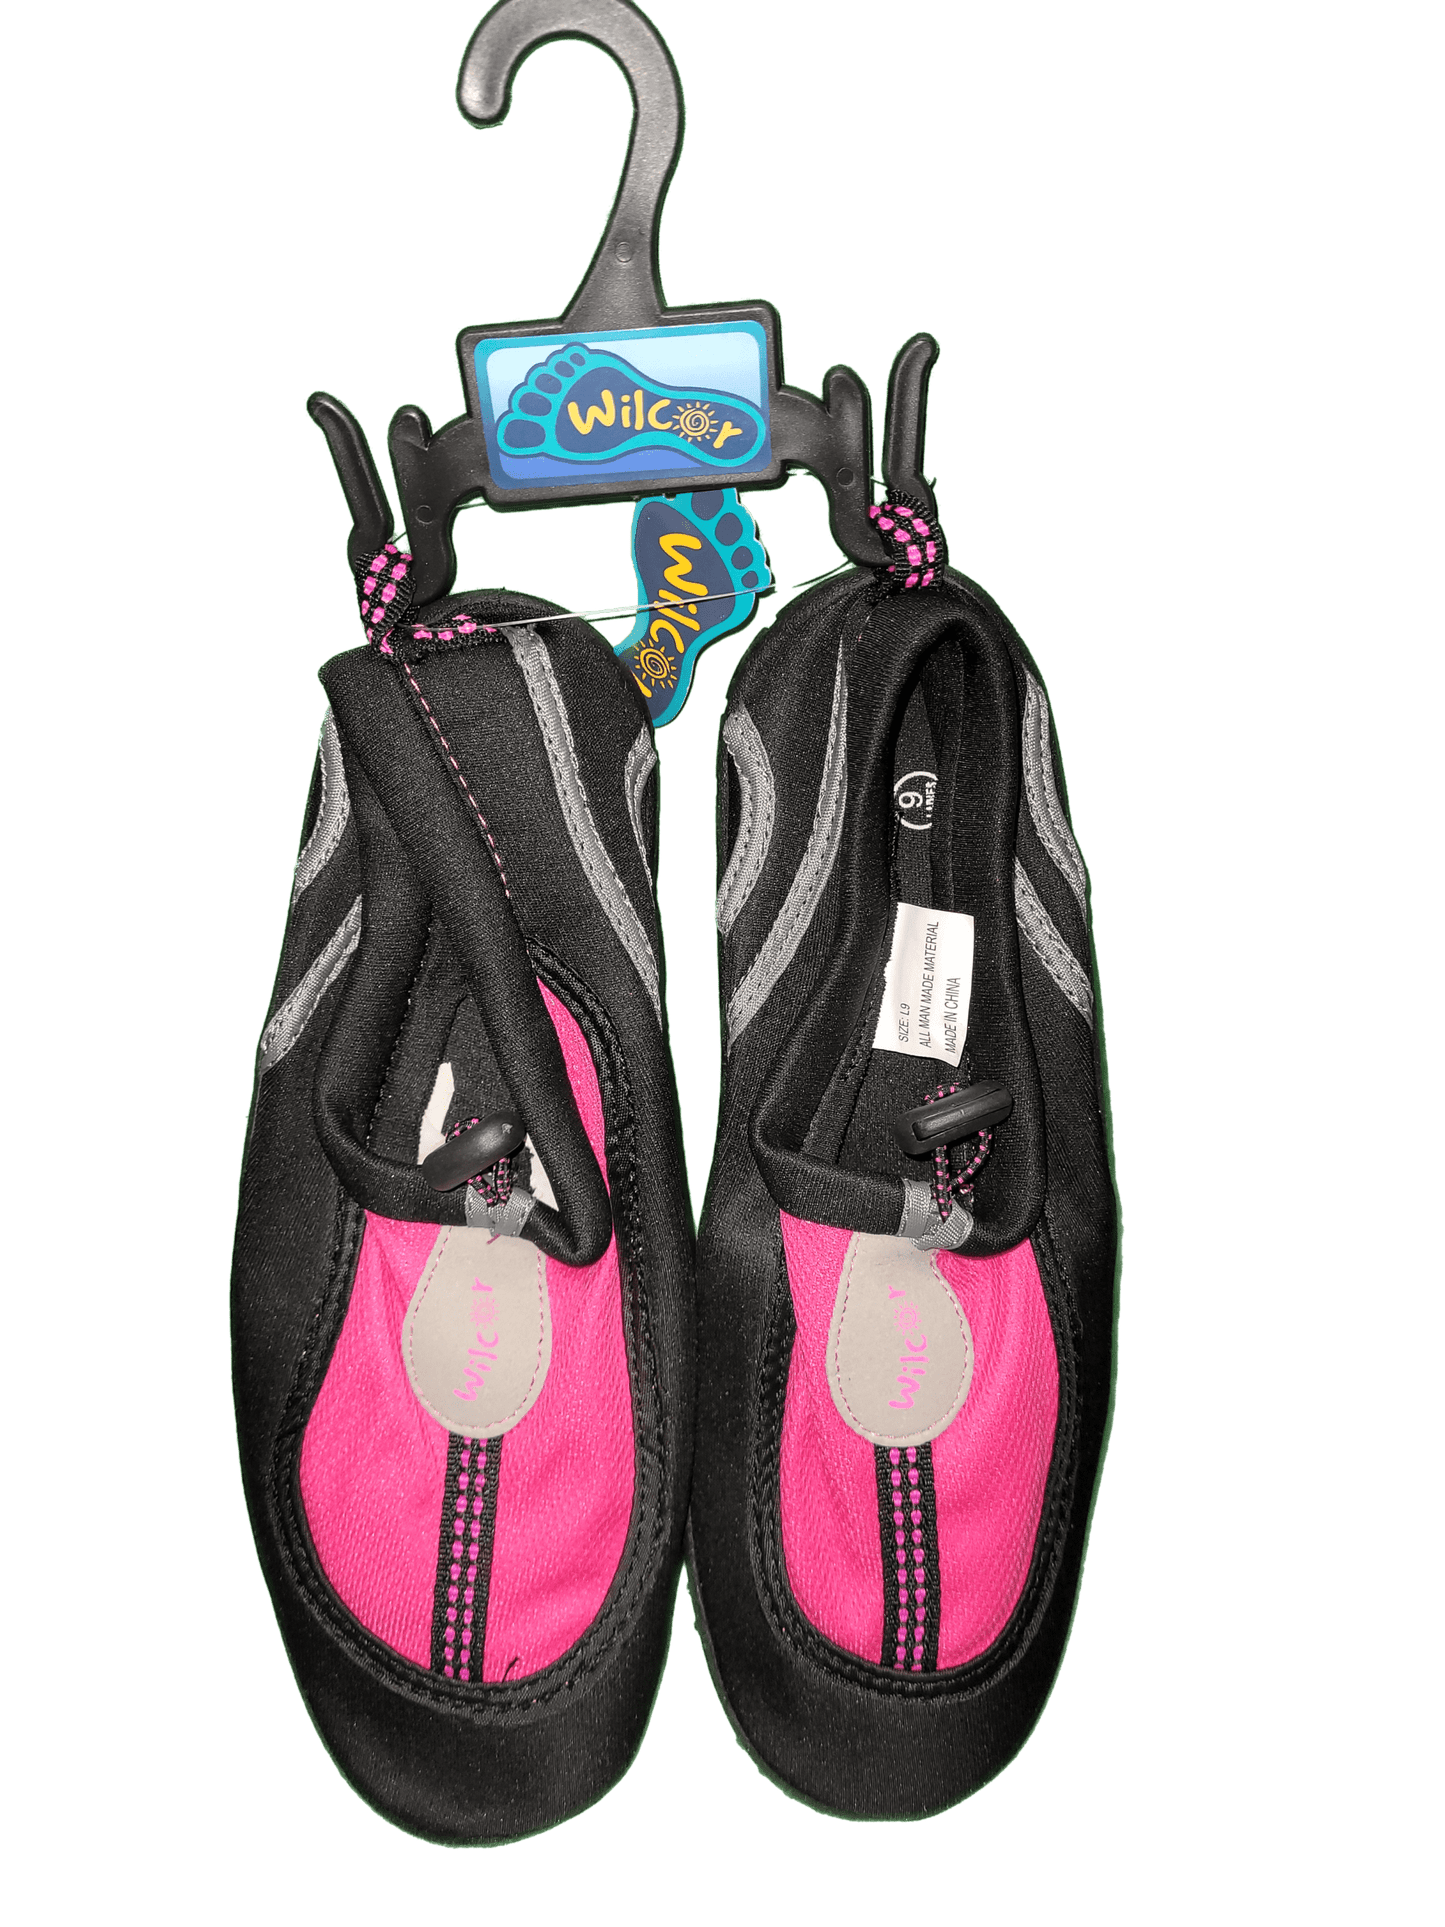 Wilcor Women's Aqua Shoes